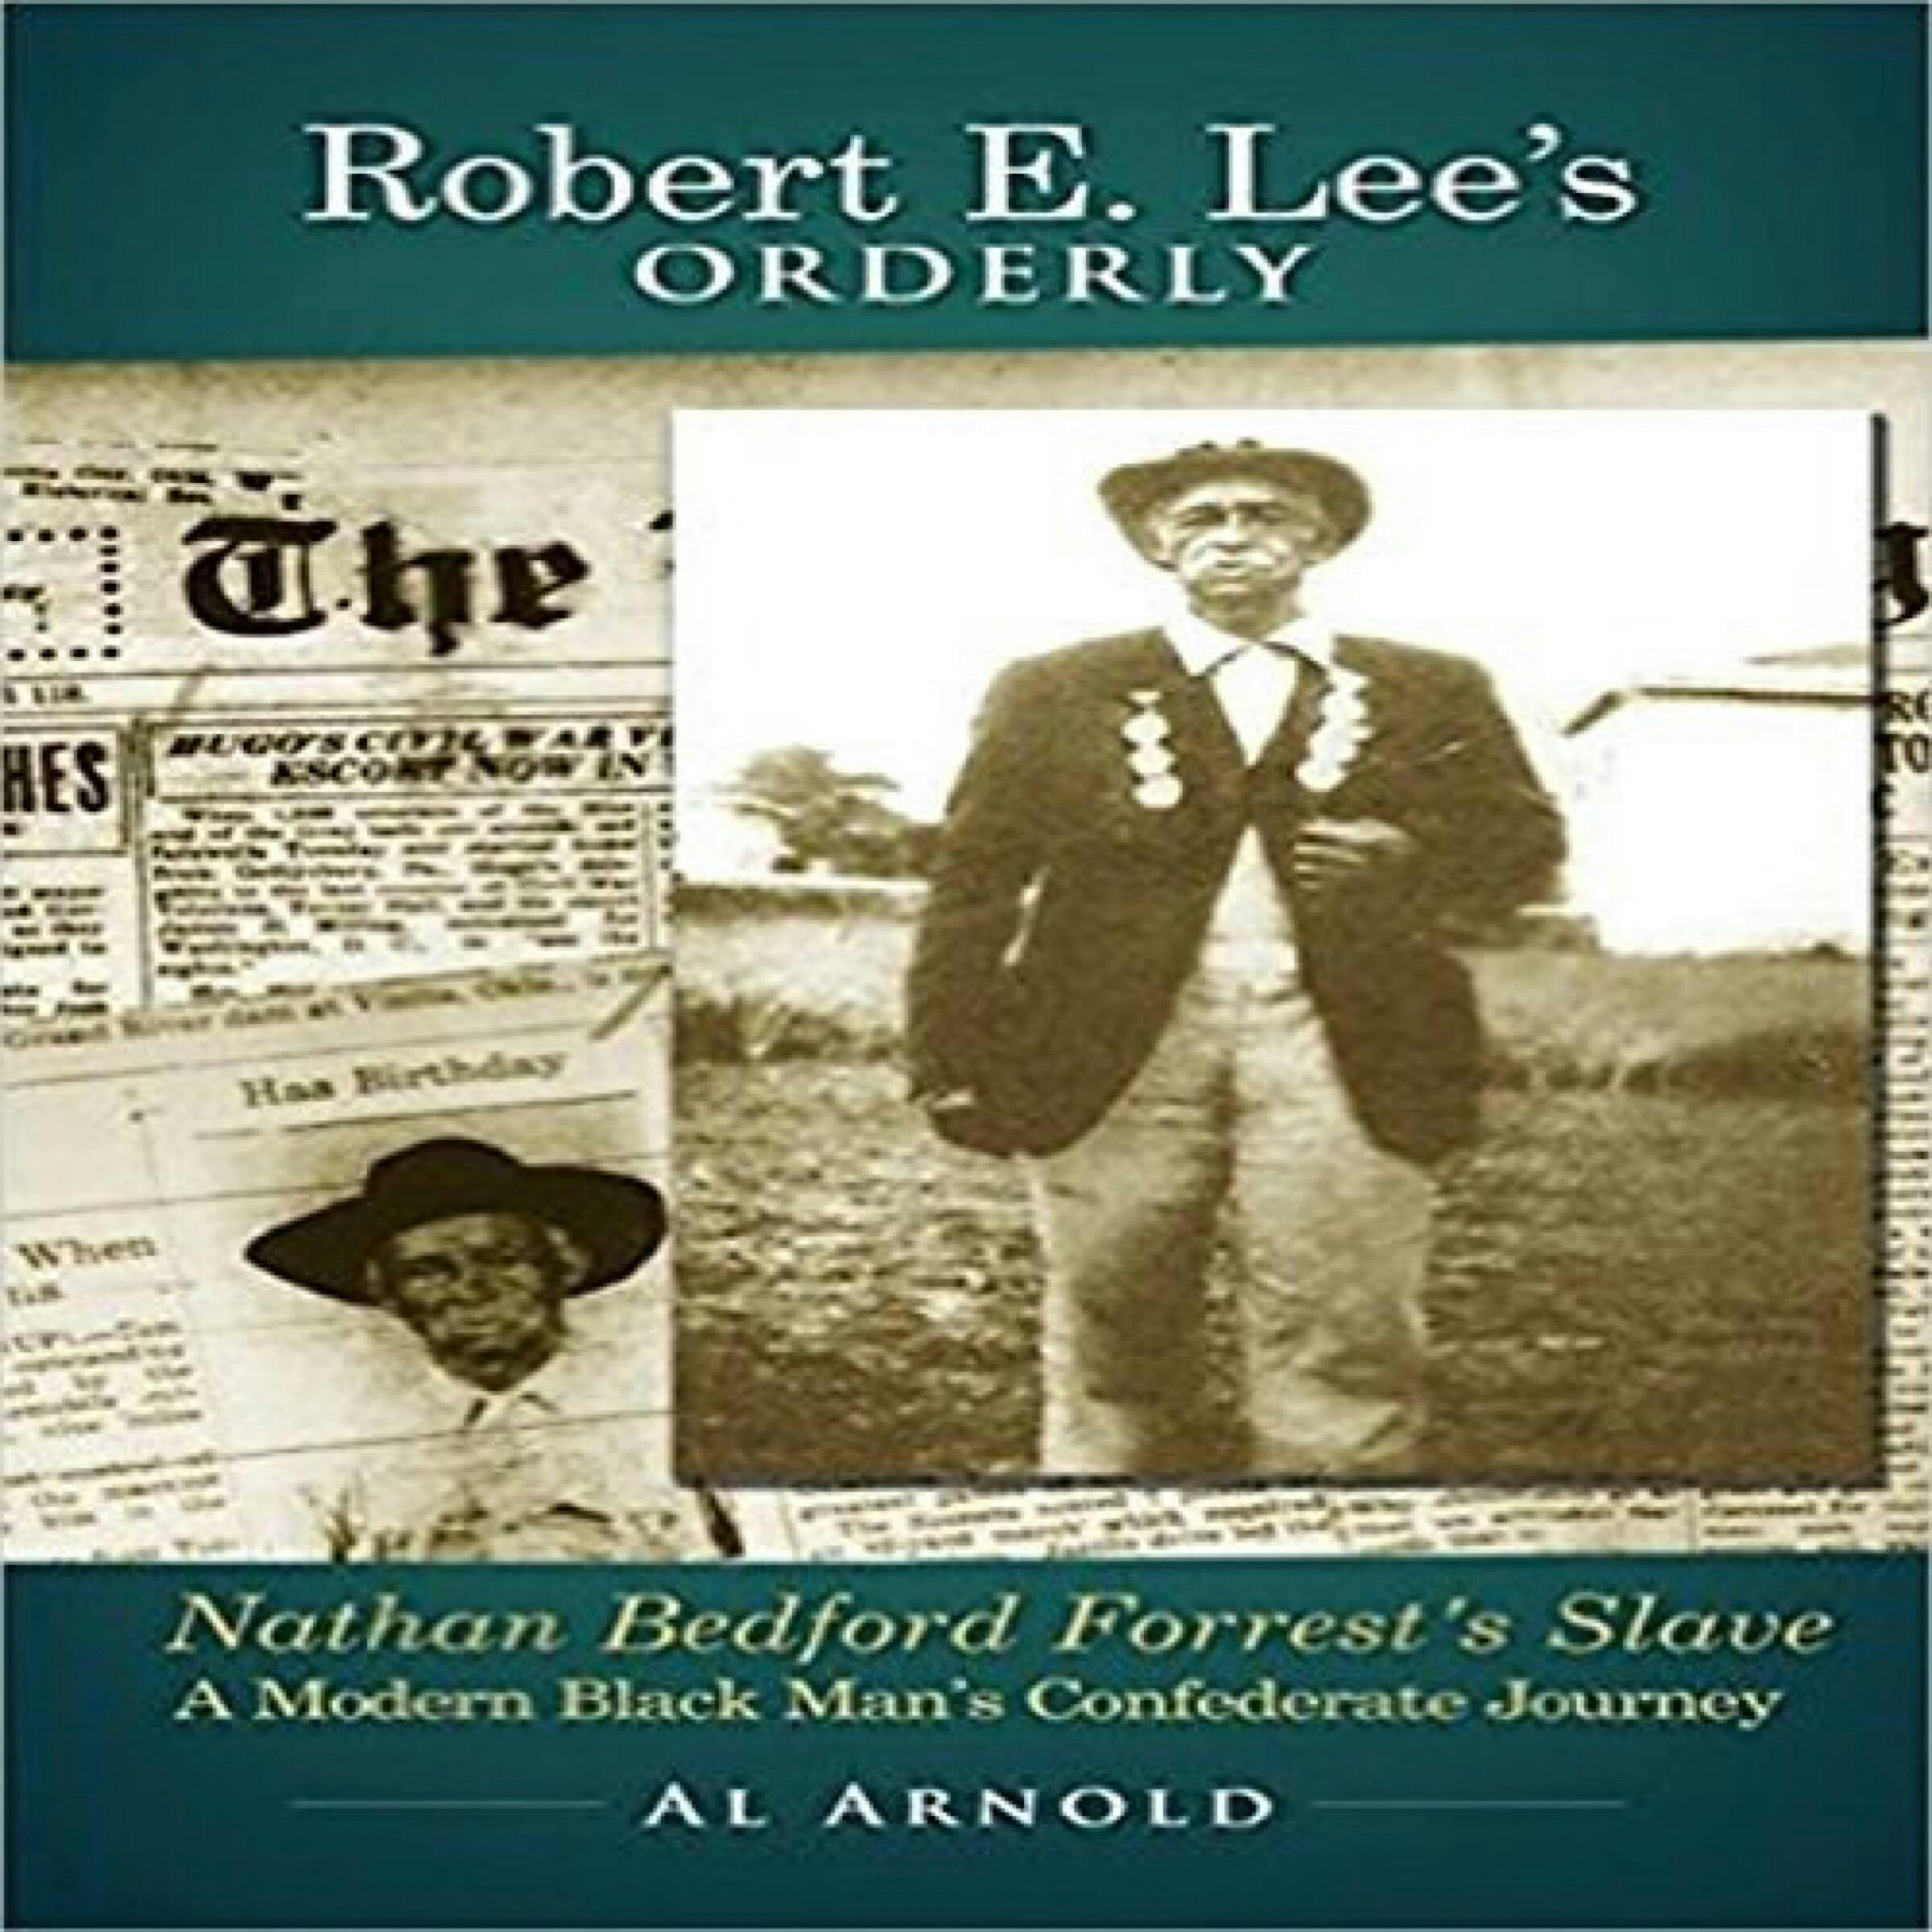 Robert E. Lee's Orderly: A Modern Black Man's Confederate Journey - Al Arnold